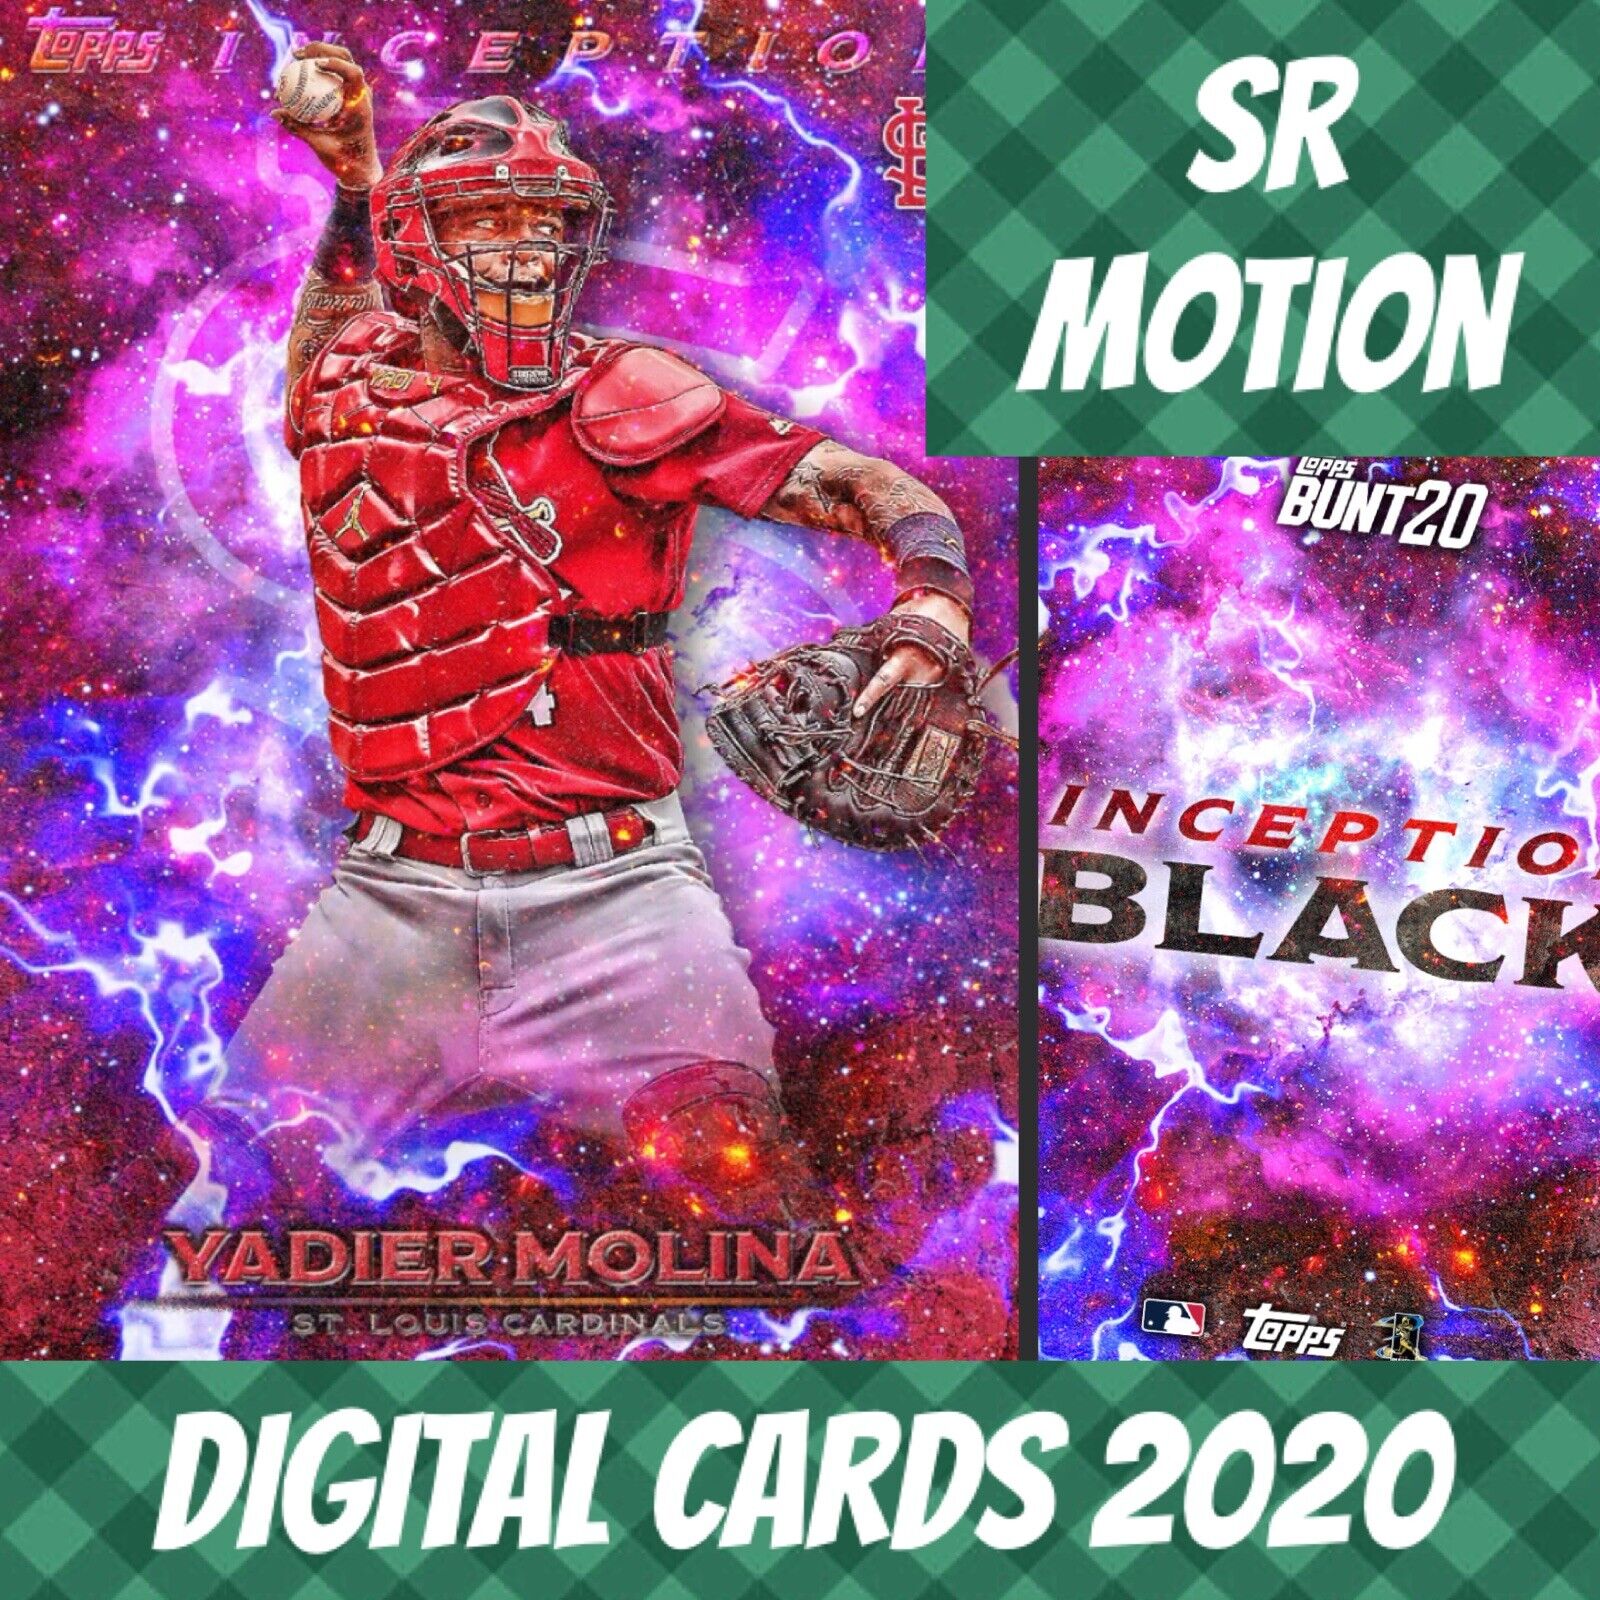 Topps Bunt 20 Yadier Molina Inception Black Galaxy Base S/1 2020 Digital Card